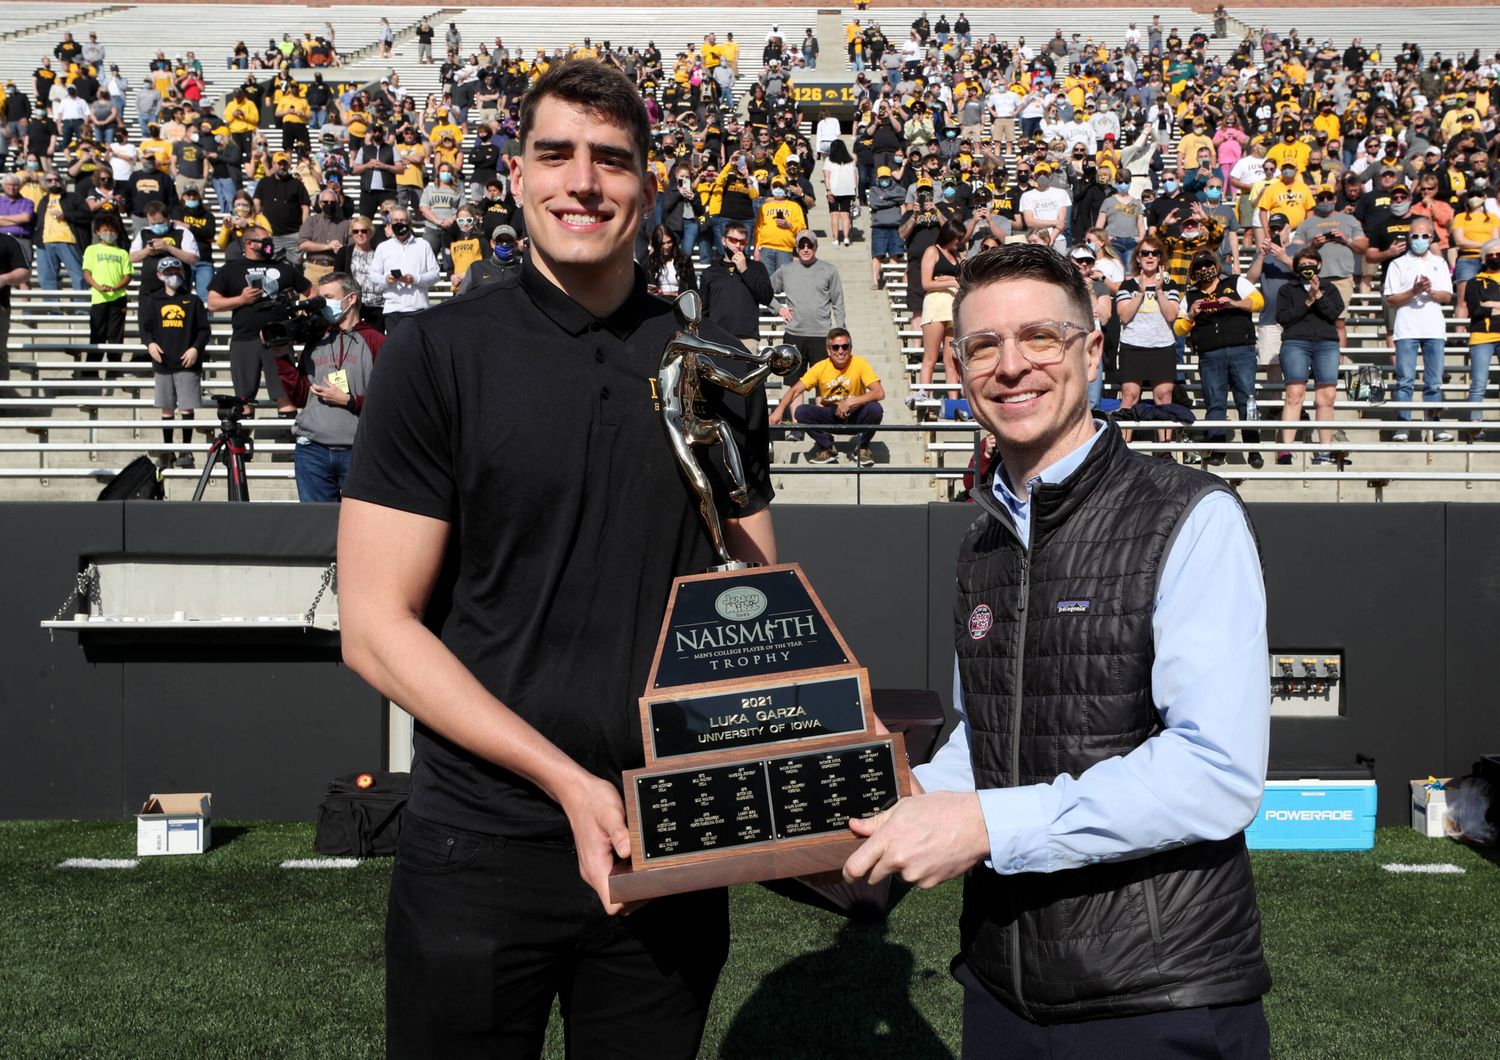 Luka Garza Receives Naismith Trophy – University of Iowa Athletics